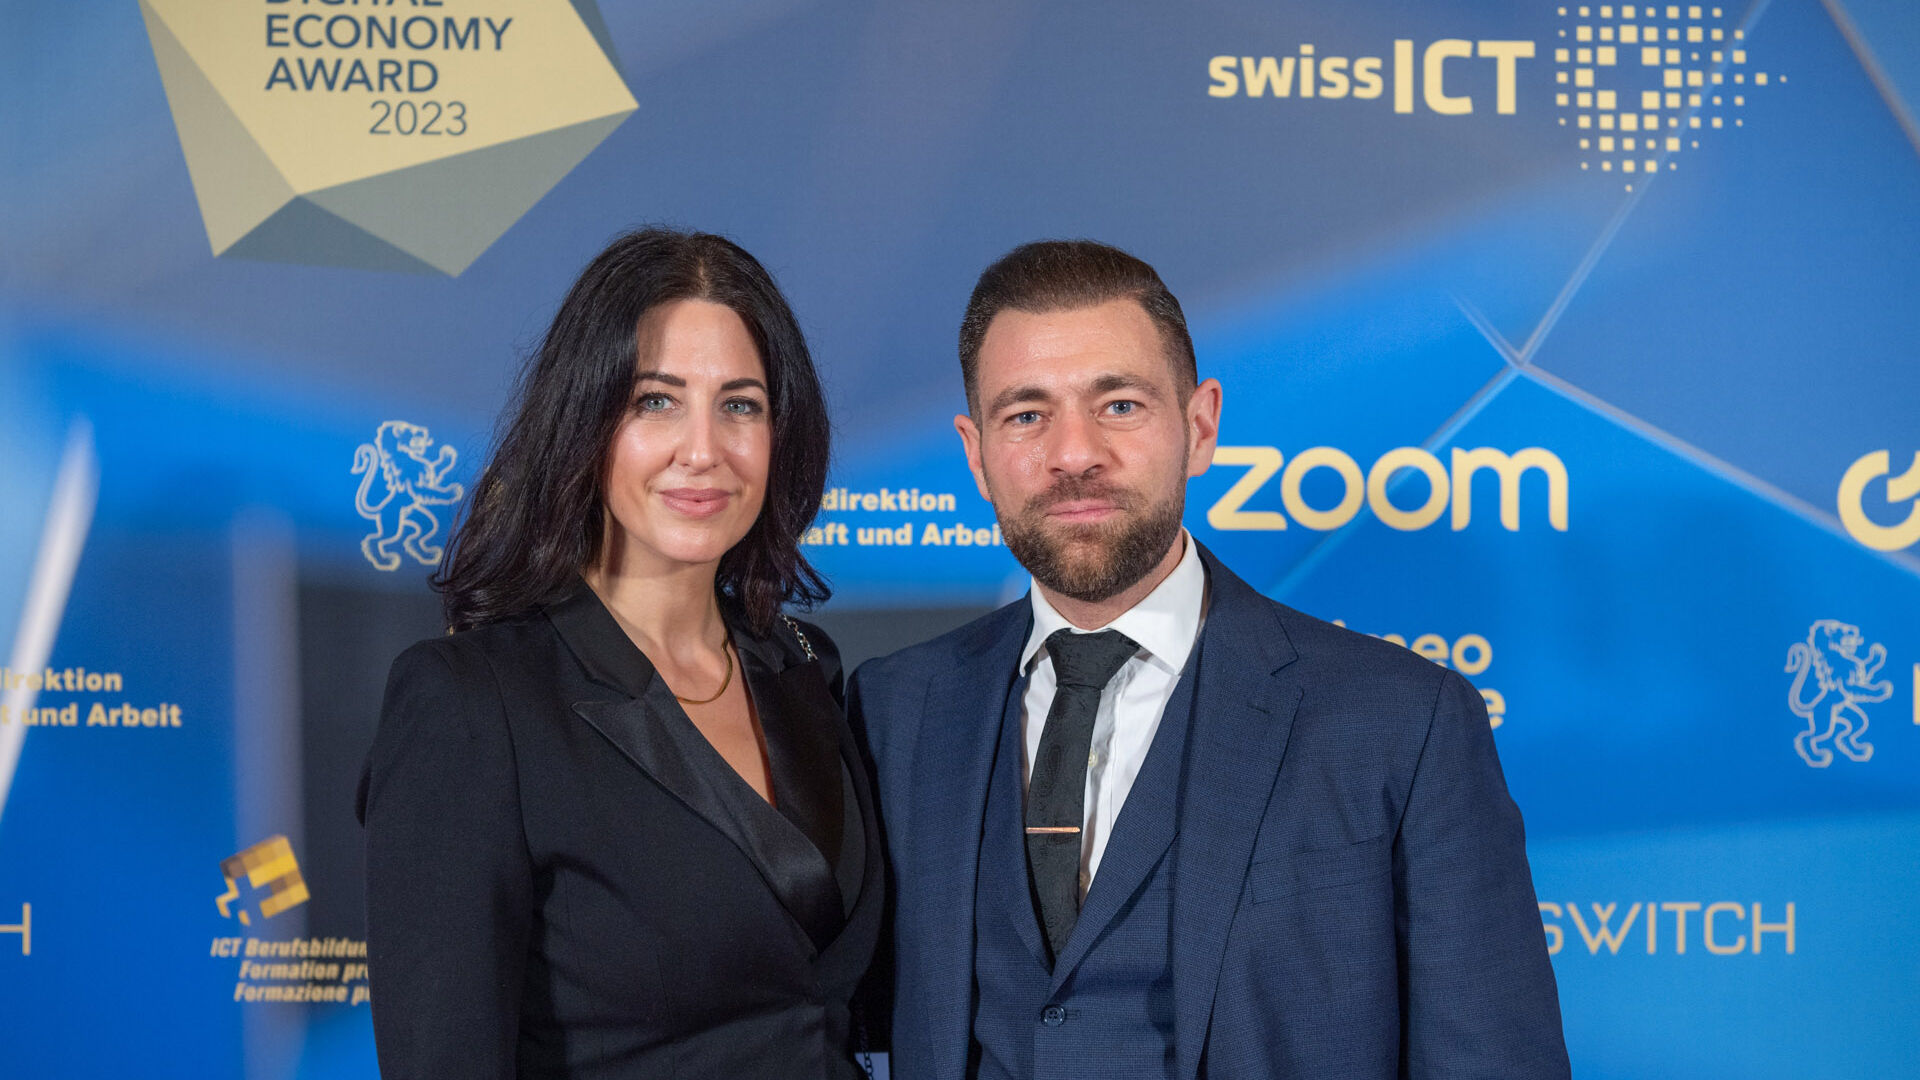 Digital Economy Award: bildegalleriet fra prisutdelingen på Hallenstadion i Zürich i Sveits 16. november 2023